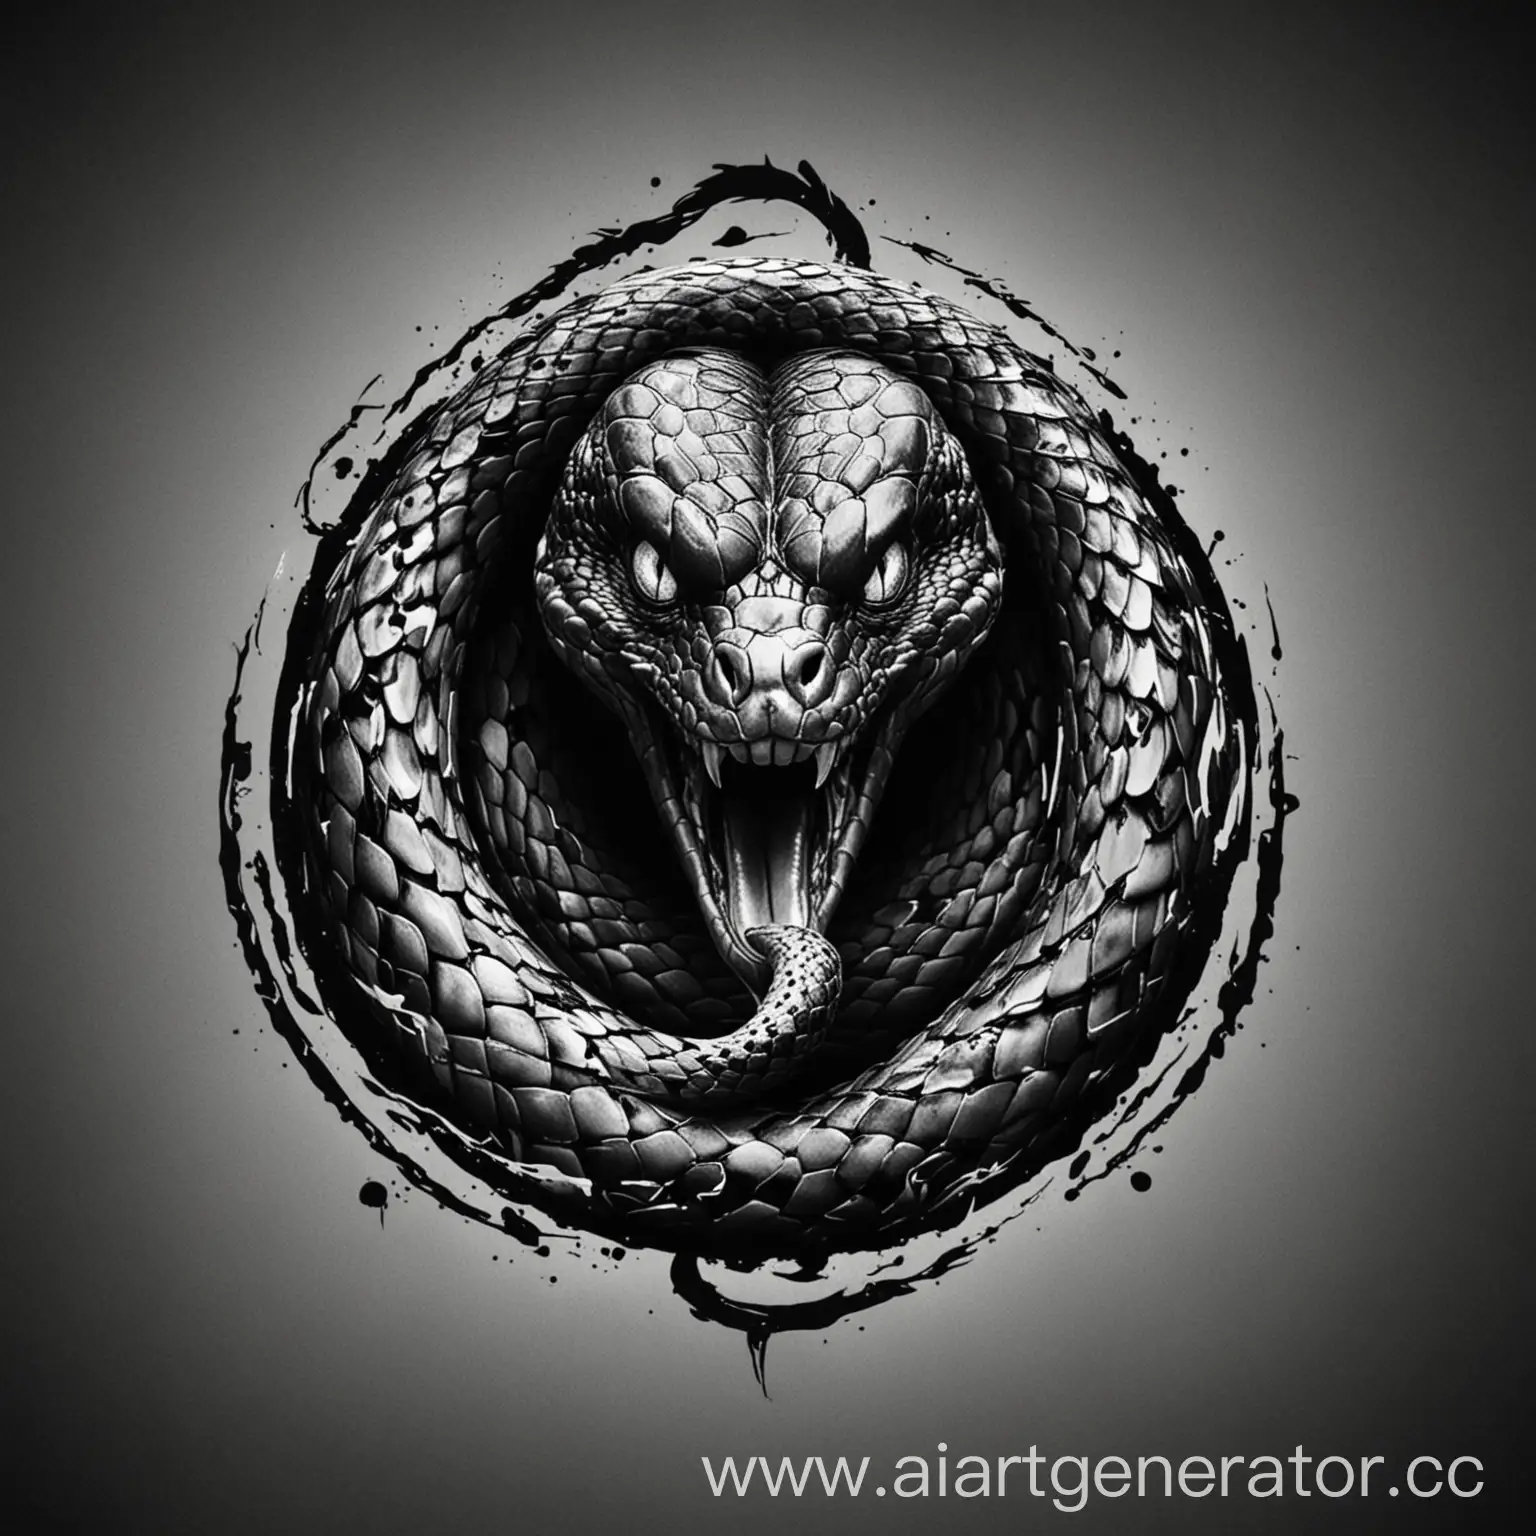 snake, black and white, abstraction, wild, anger, inspiration, logo
